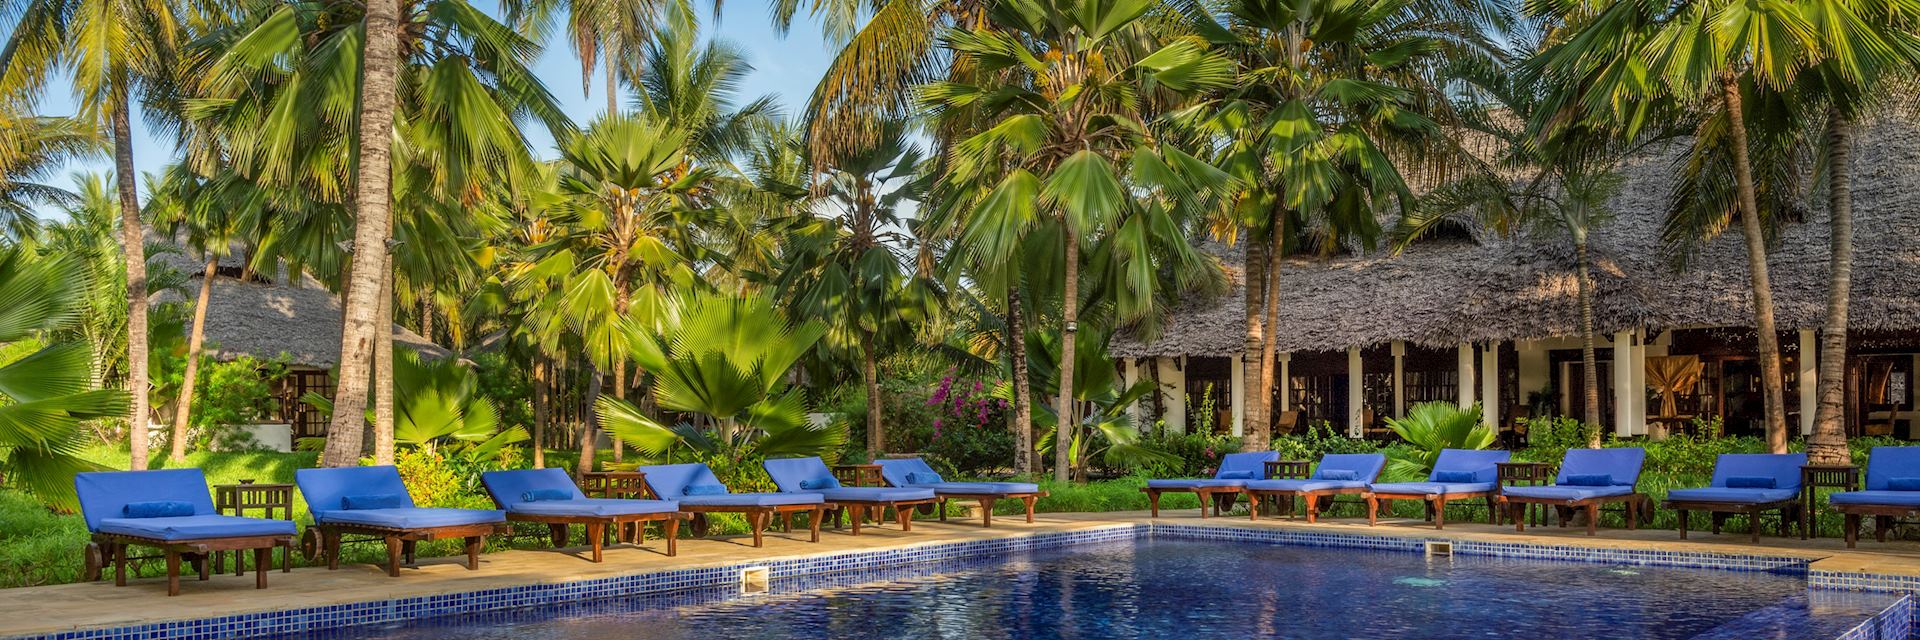 Swimming pool at The Palms, Zanzibar Island